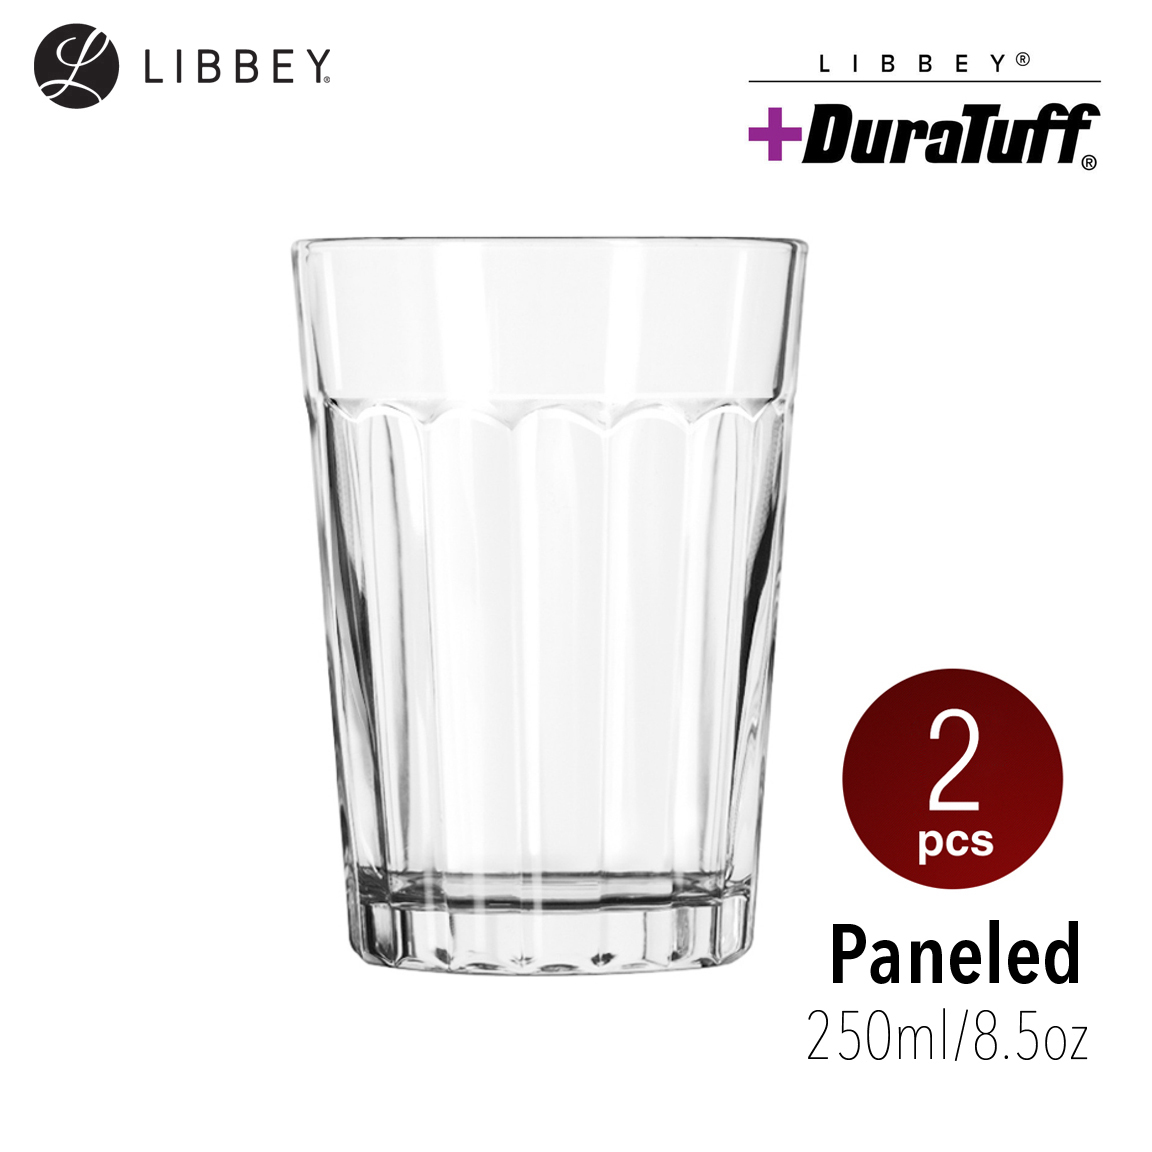 Libbey Paneled 15640 DuraTuff Glass Tumbler 250ml/8.5oz 2-pc Set